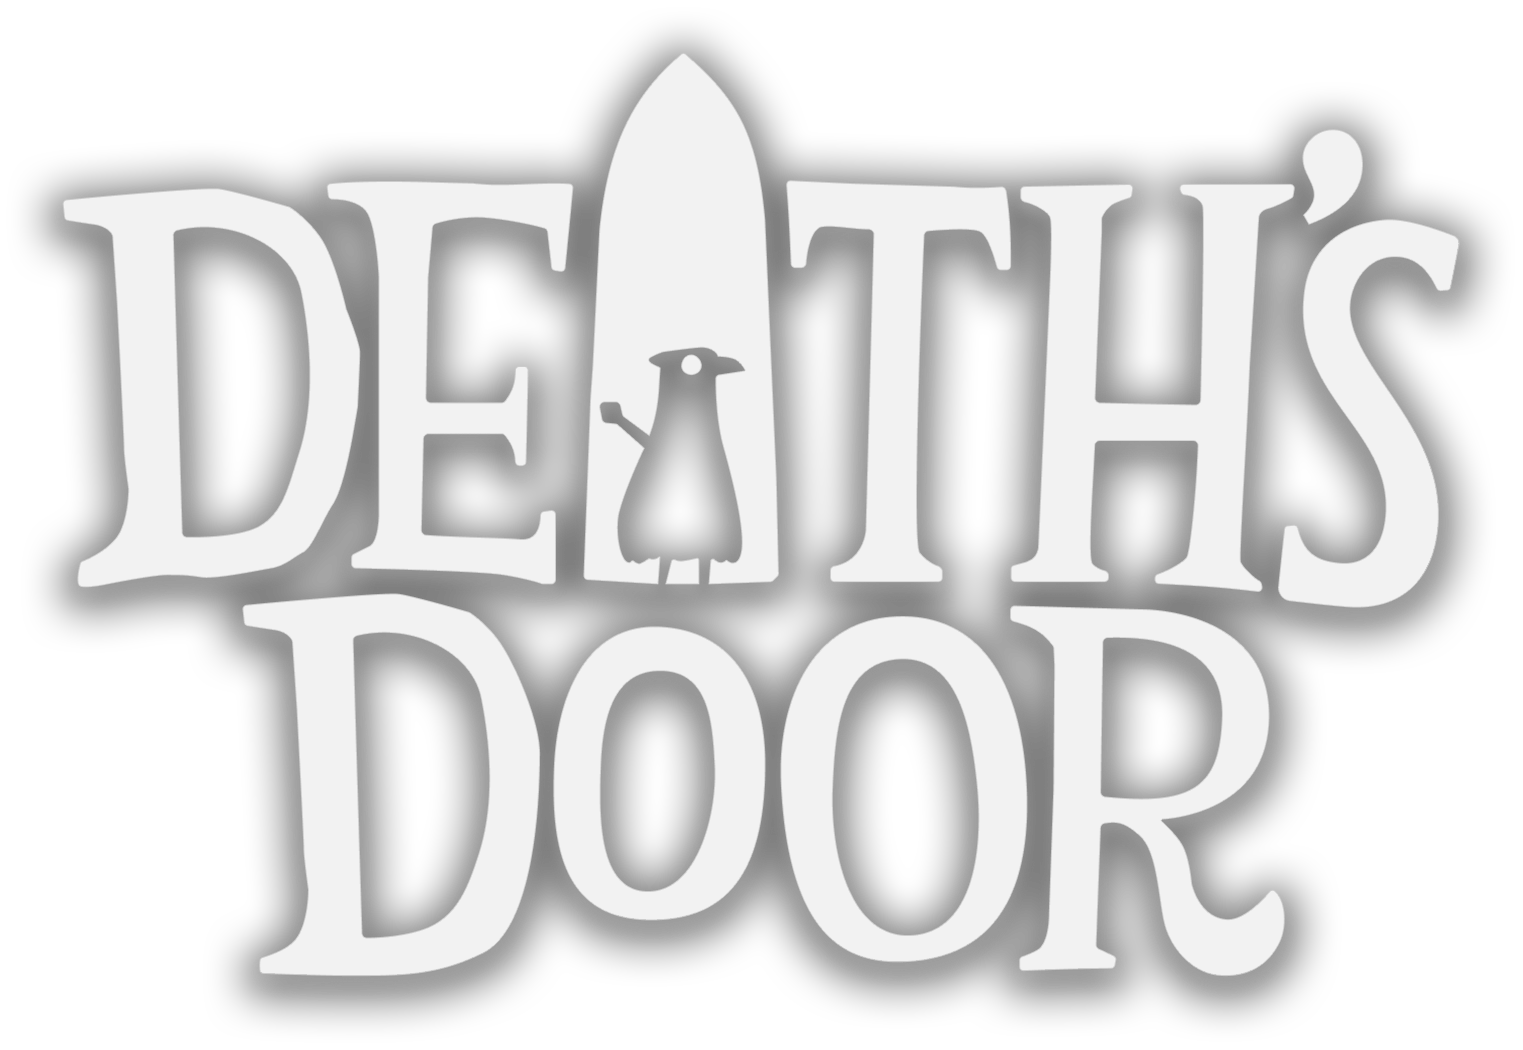 Death's Door игра. Логотип игры Дорс. Death логотип. Значок игры Doors. Death door игра